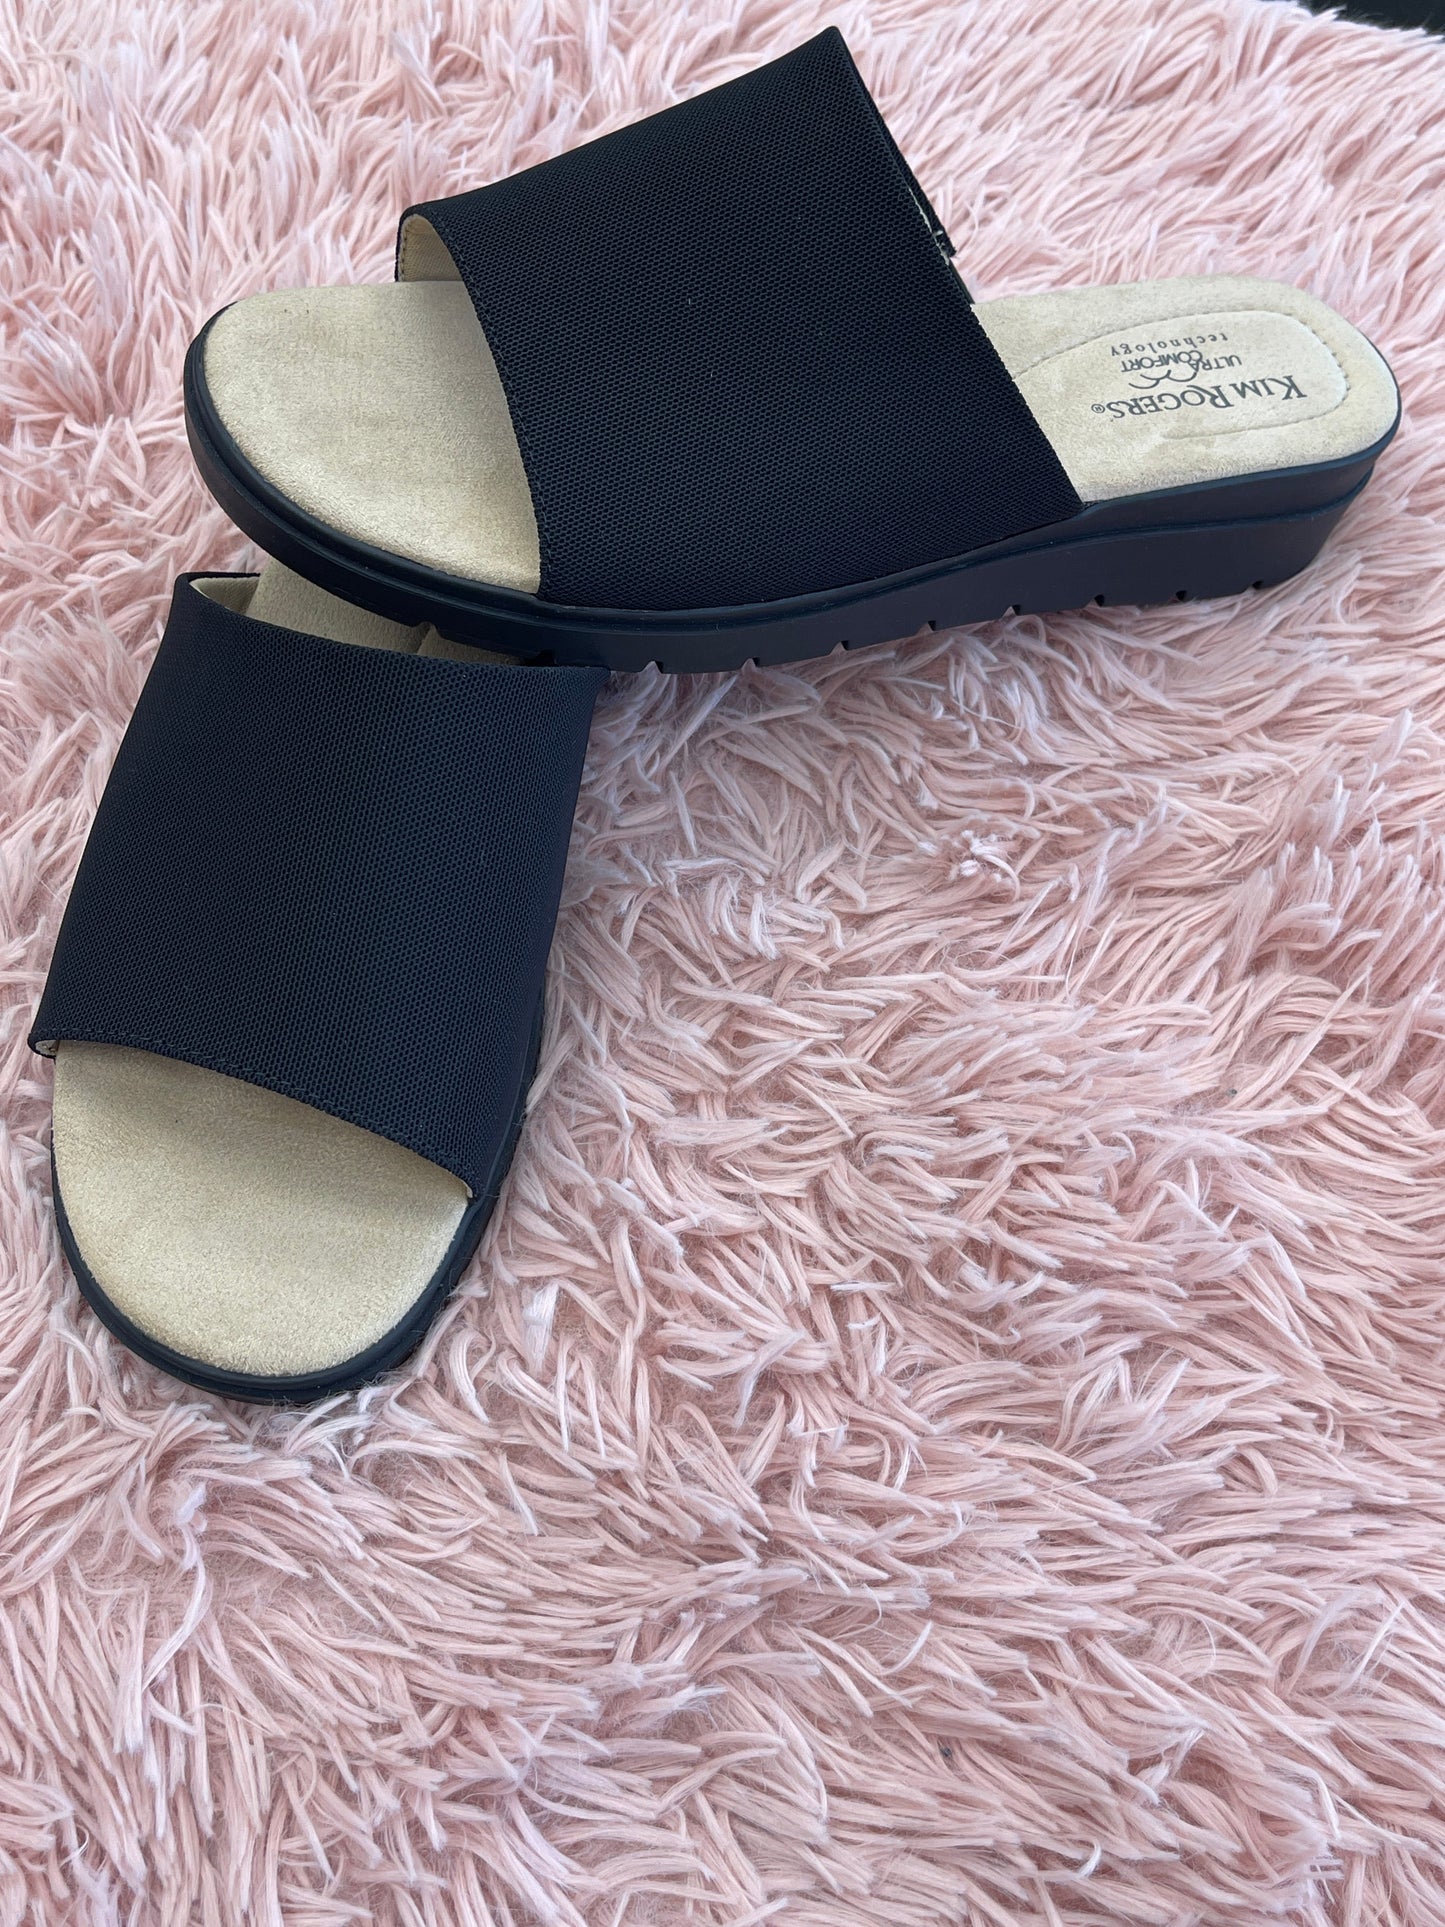 Black Sandals Flats Kim Rogers, Size 10